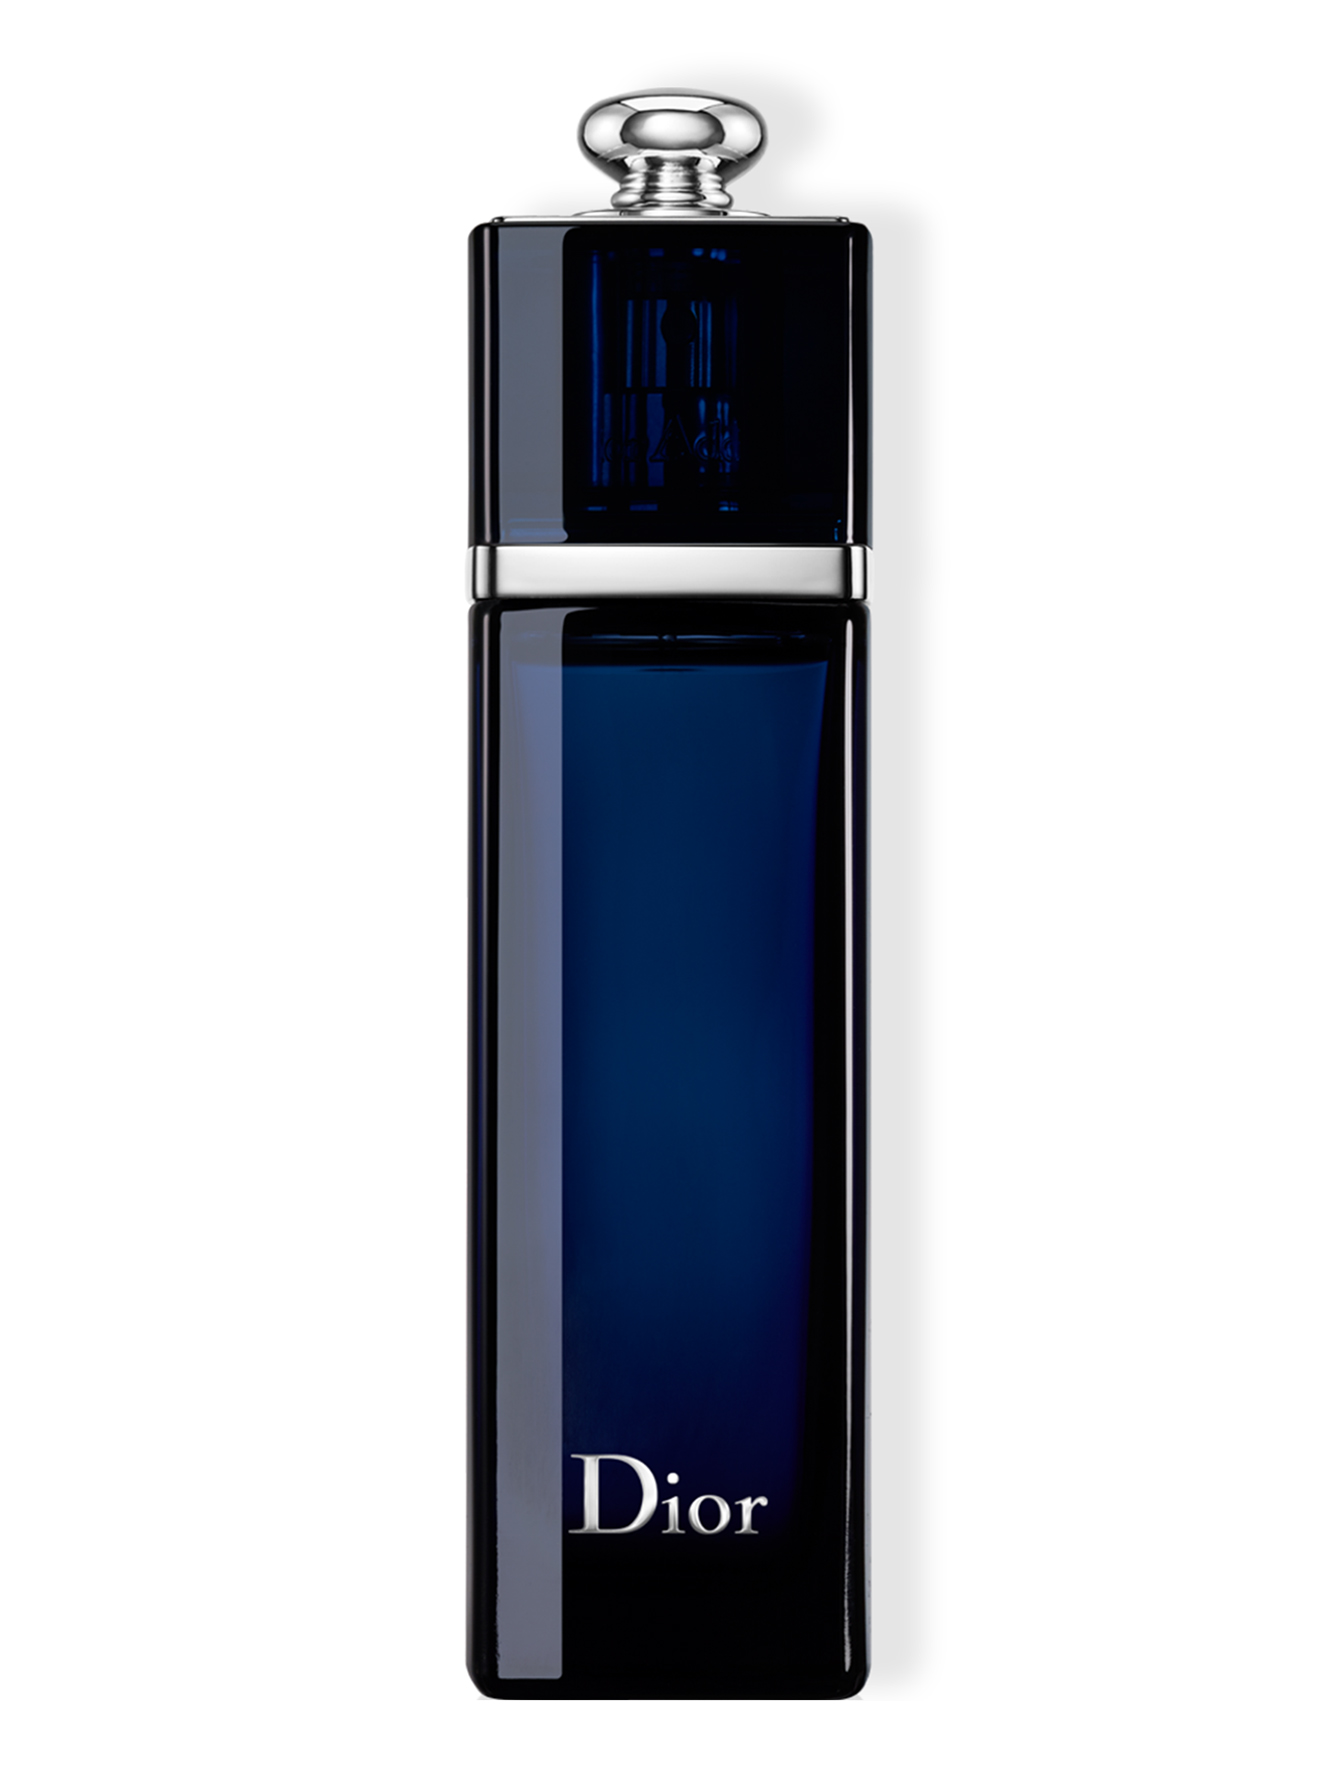 Dior Addict Парфюмерная вода  100 мл - Деталь